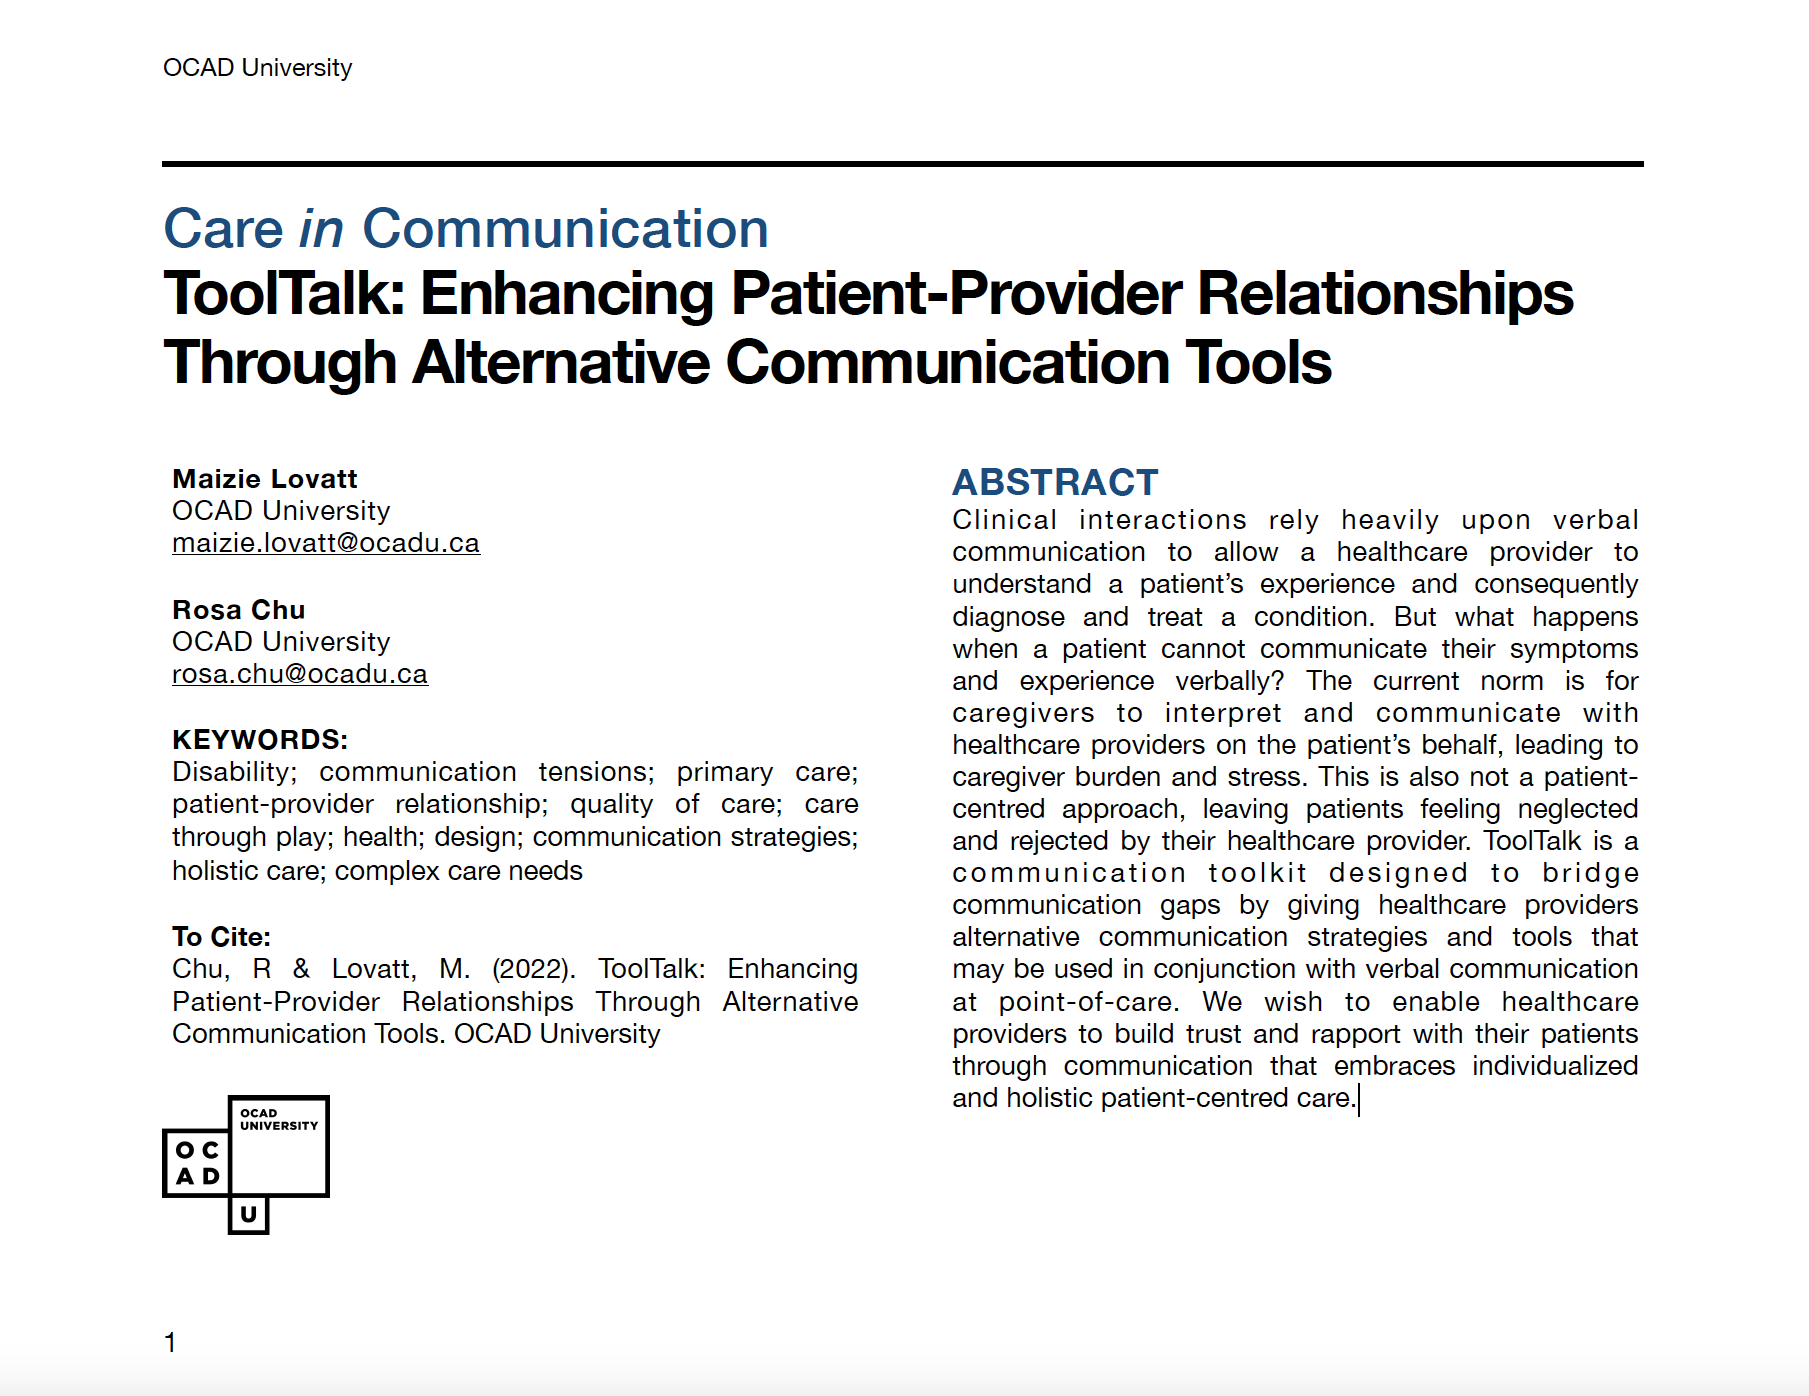 ToolTalk: Enhancing Patient-Provider Relationships Through Alternative Communication Tools